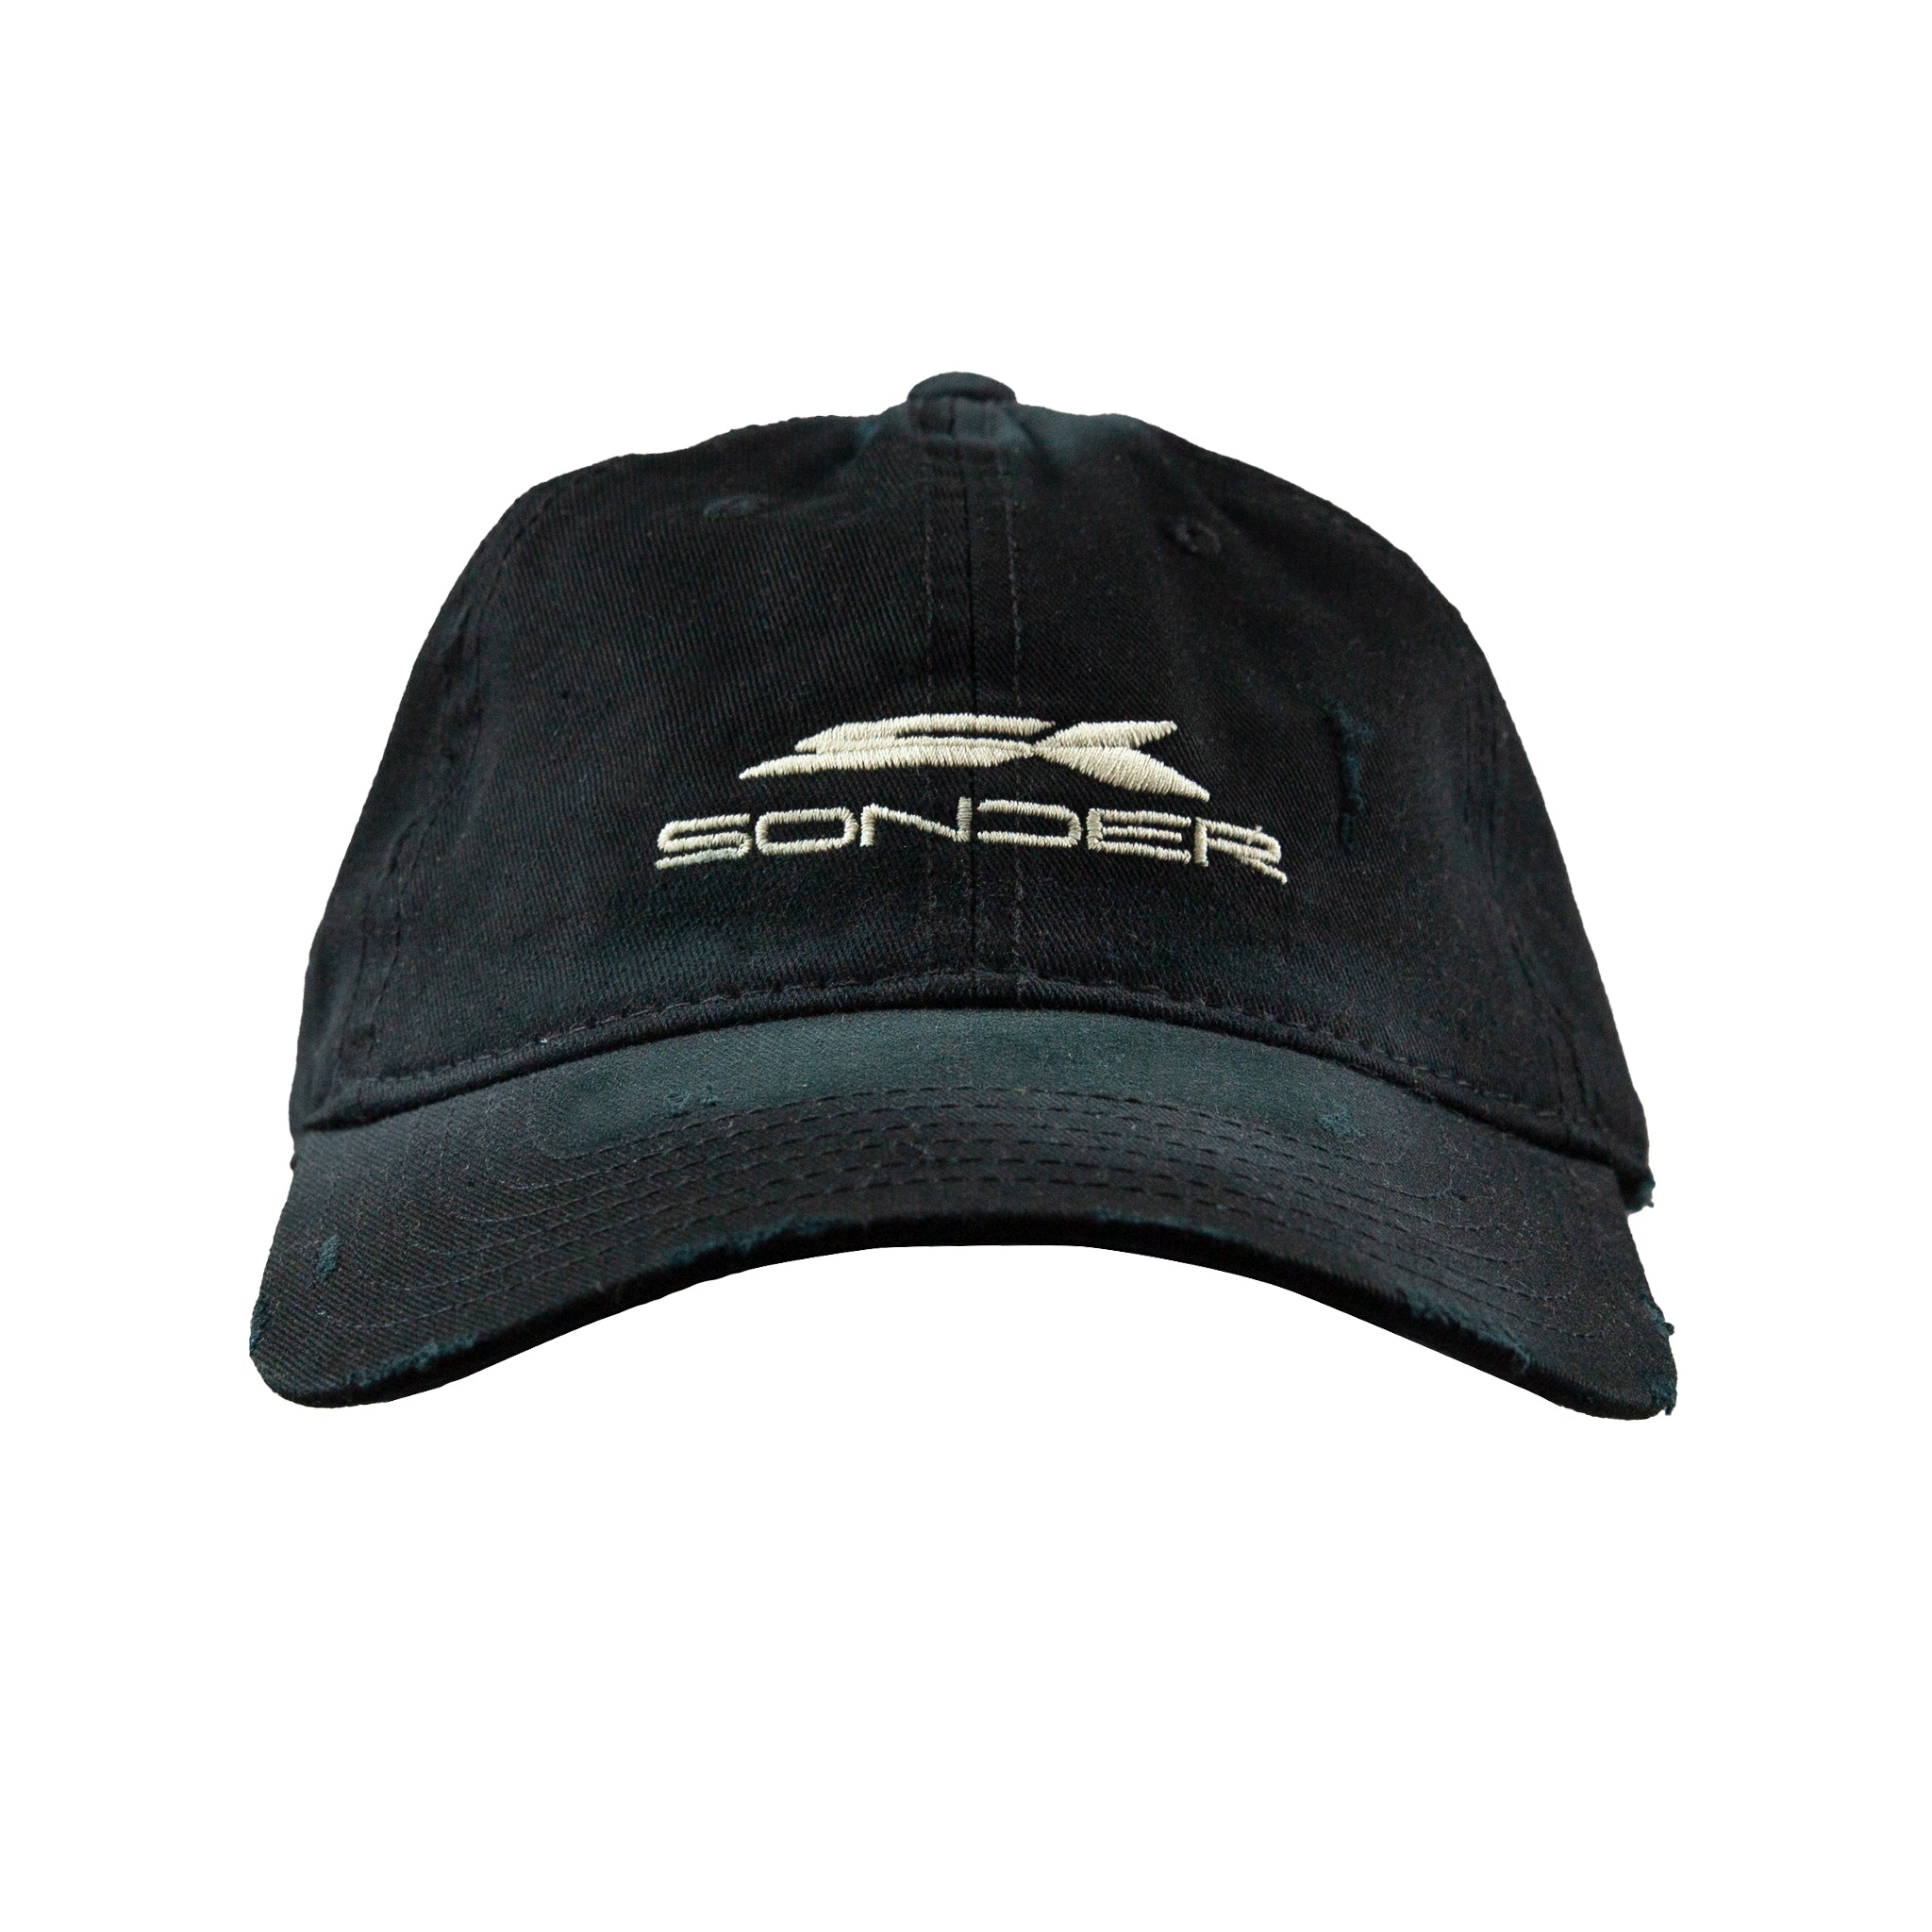 SR Logo Hat - Black/Cream